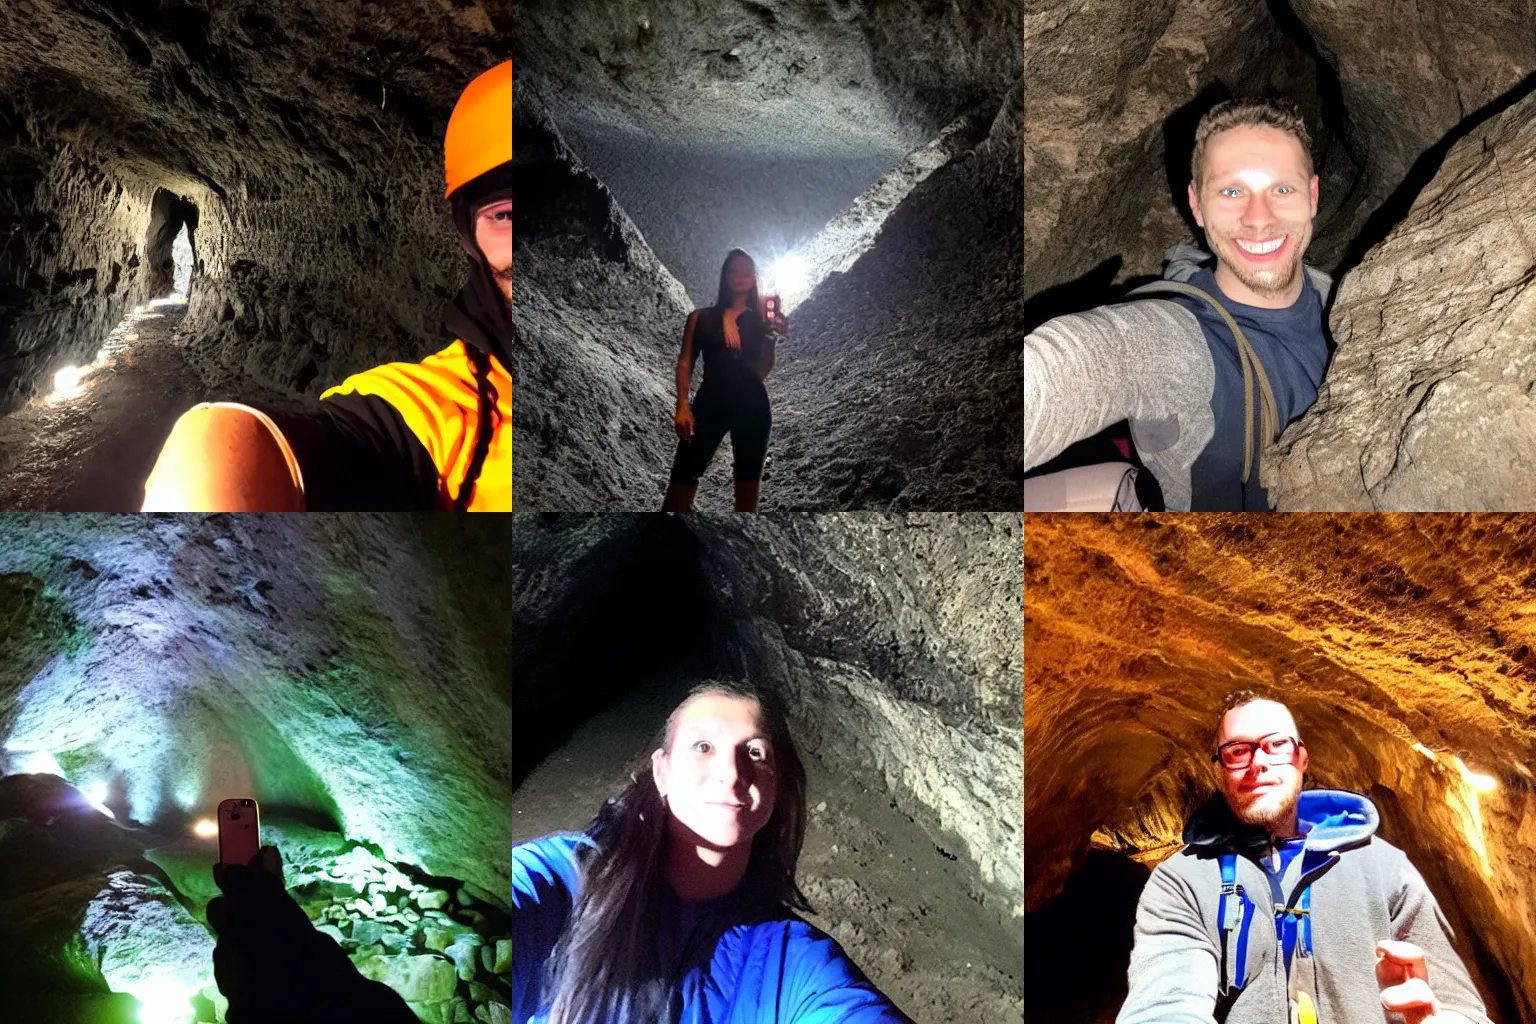 Prompt: Selfie taken in a dark cave